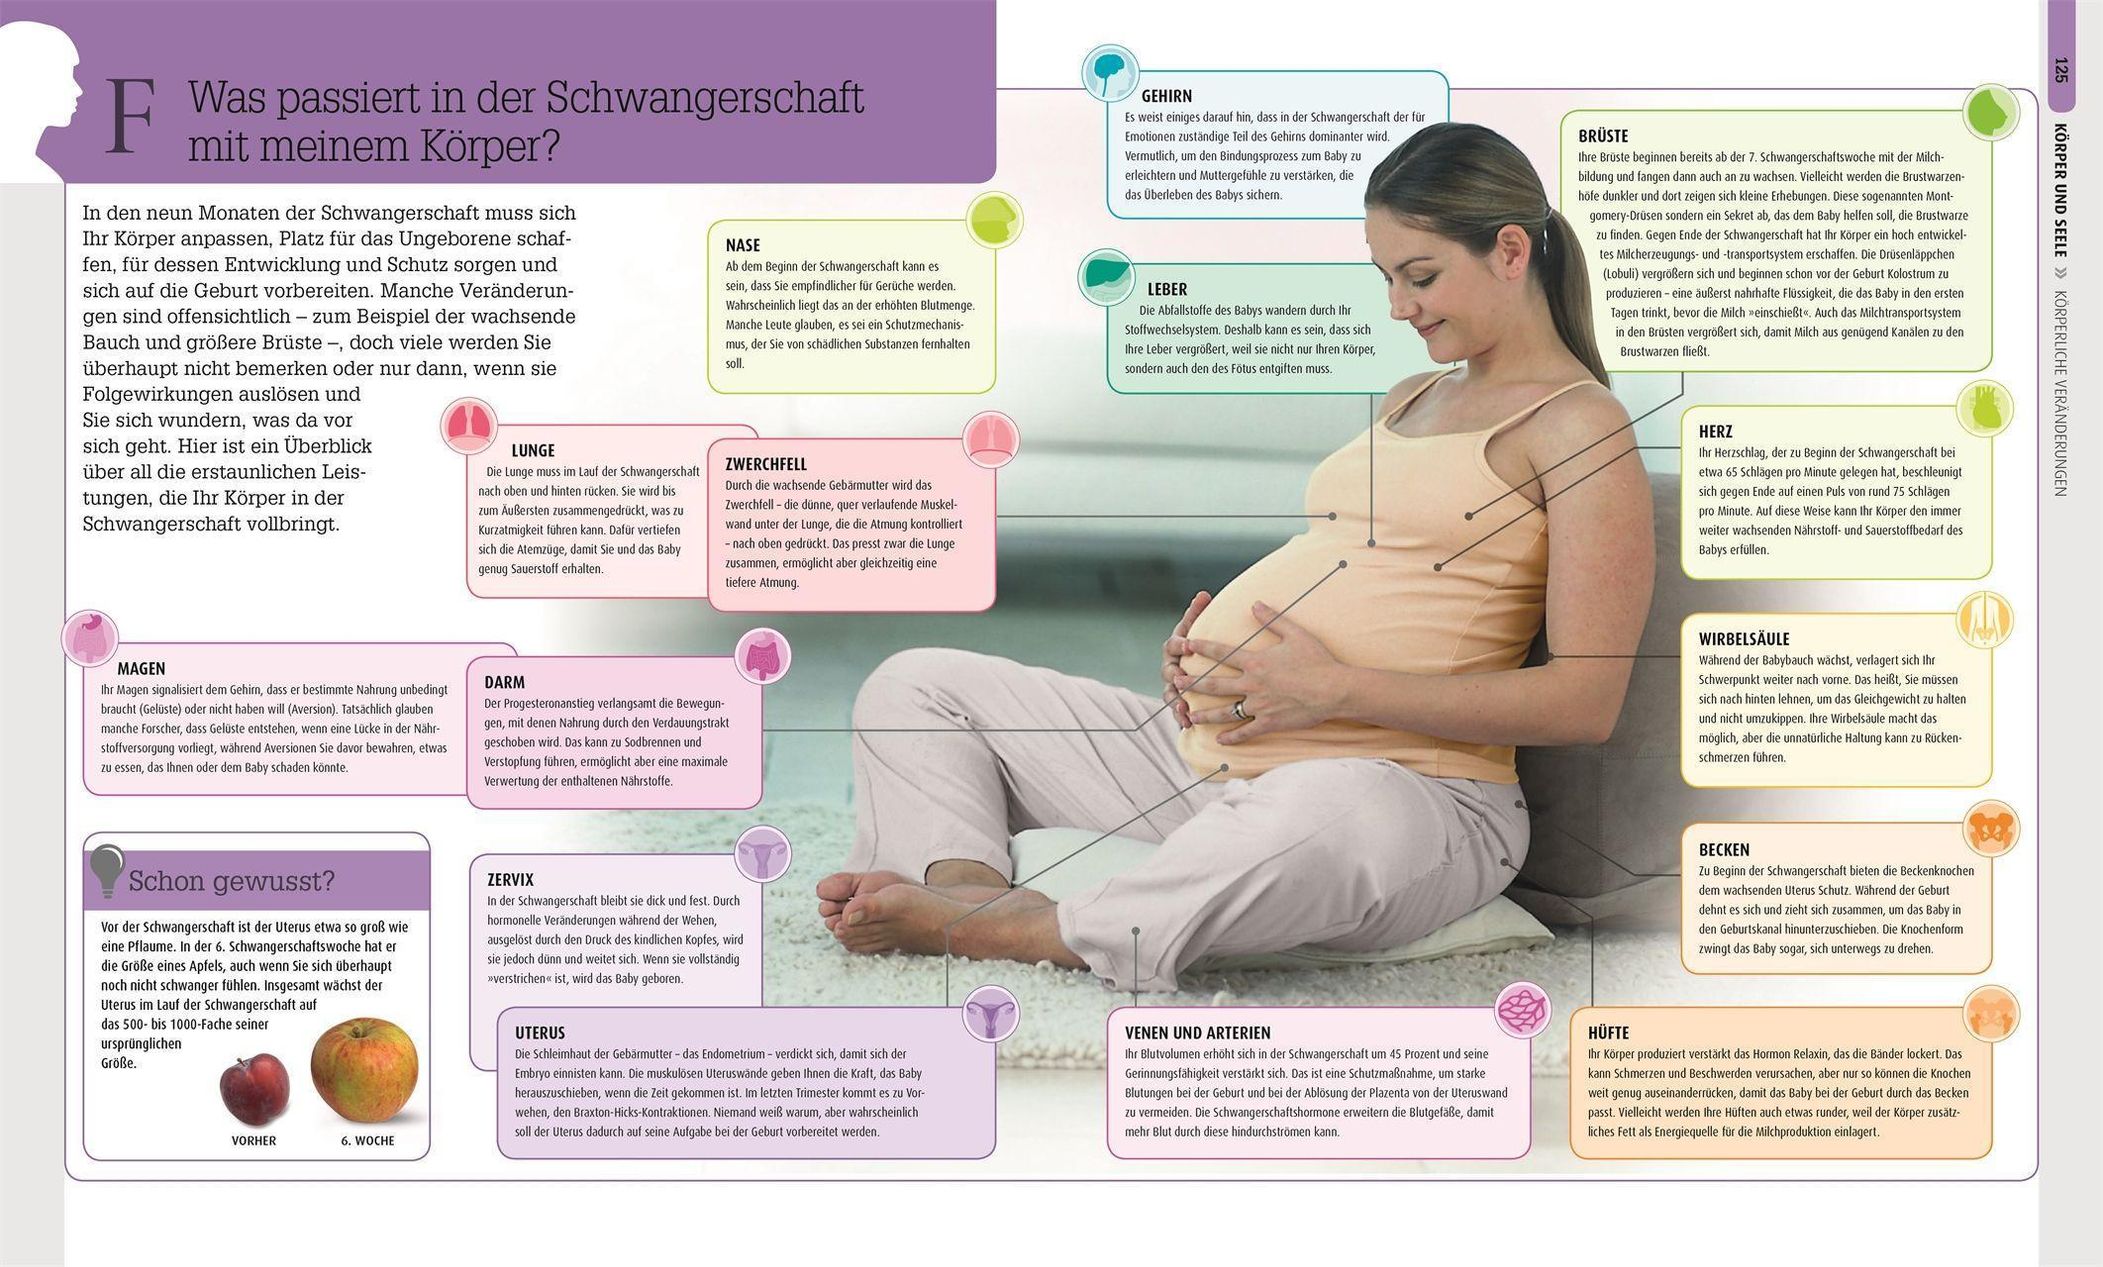 Schwangerschaft & Geburt Buch versandkostenfrei bei Weltbild.ch bestellen